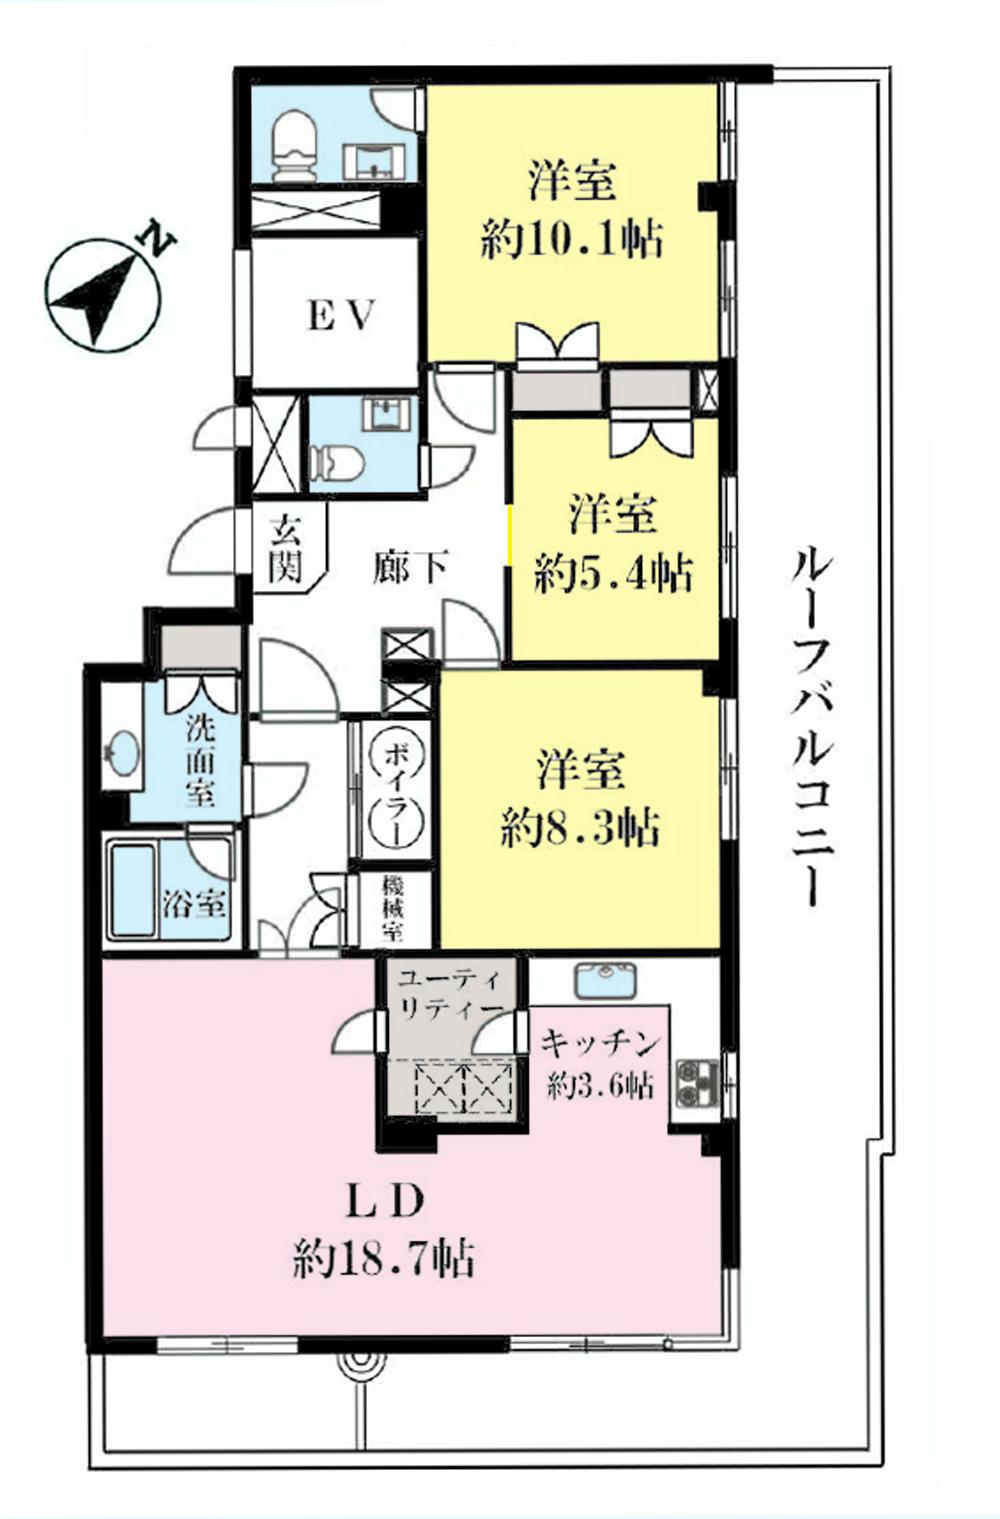 Floor plan. 3LDK, Price 108 million yen, Footprint 109.63 sq m , Balcony area 47.35 sq m floor plan